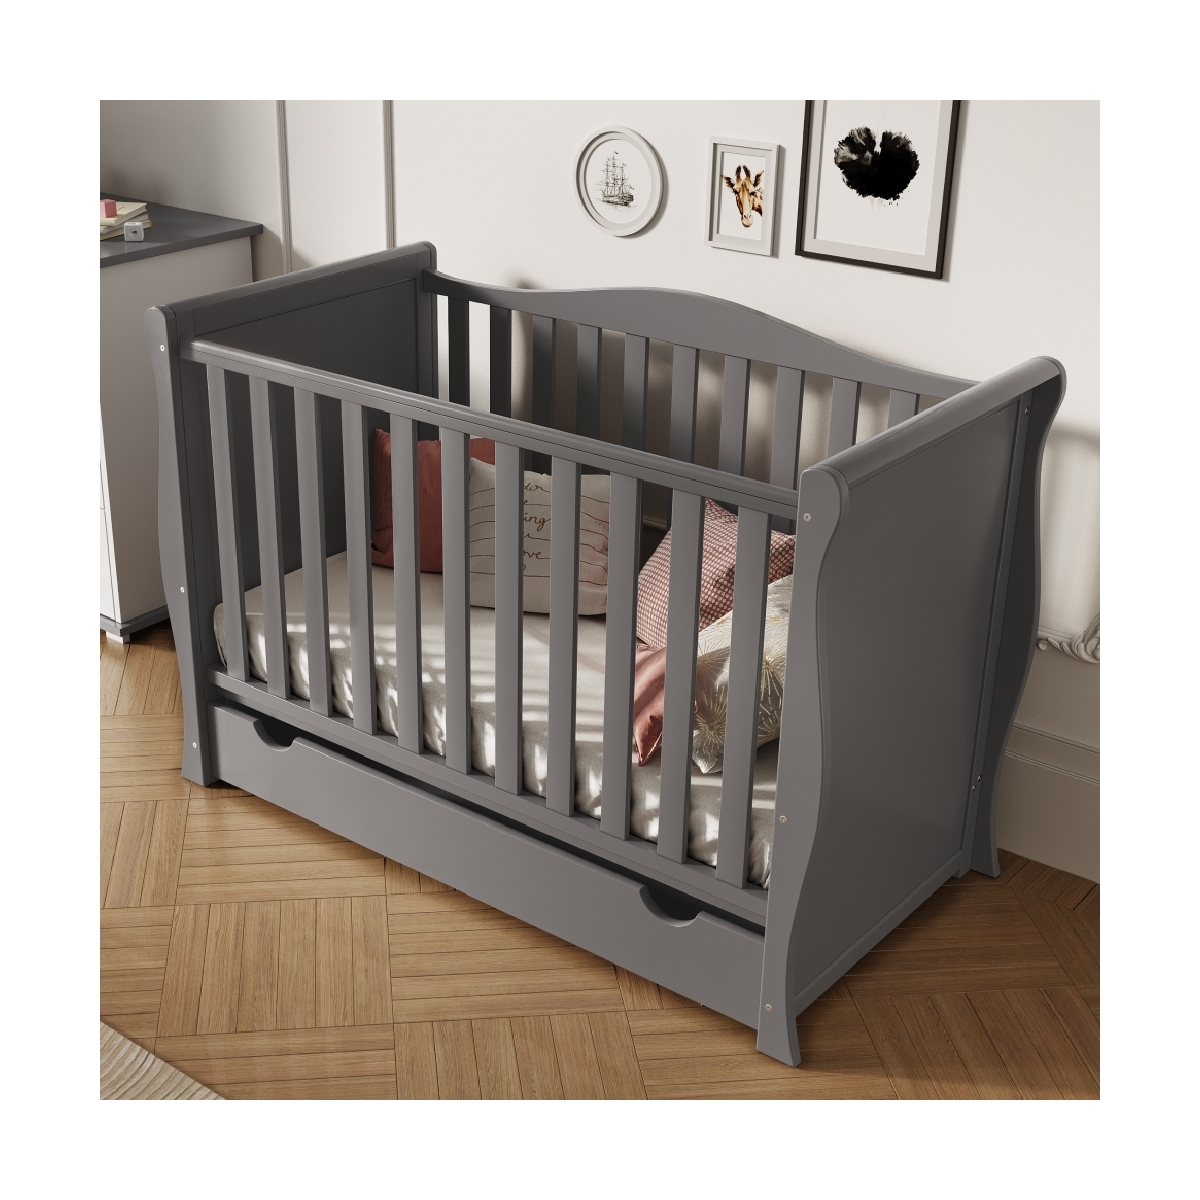 Little Babes Ltd Sleigh Mini Cot Bed